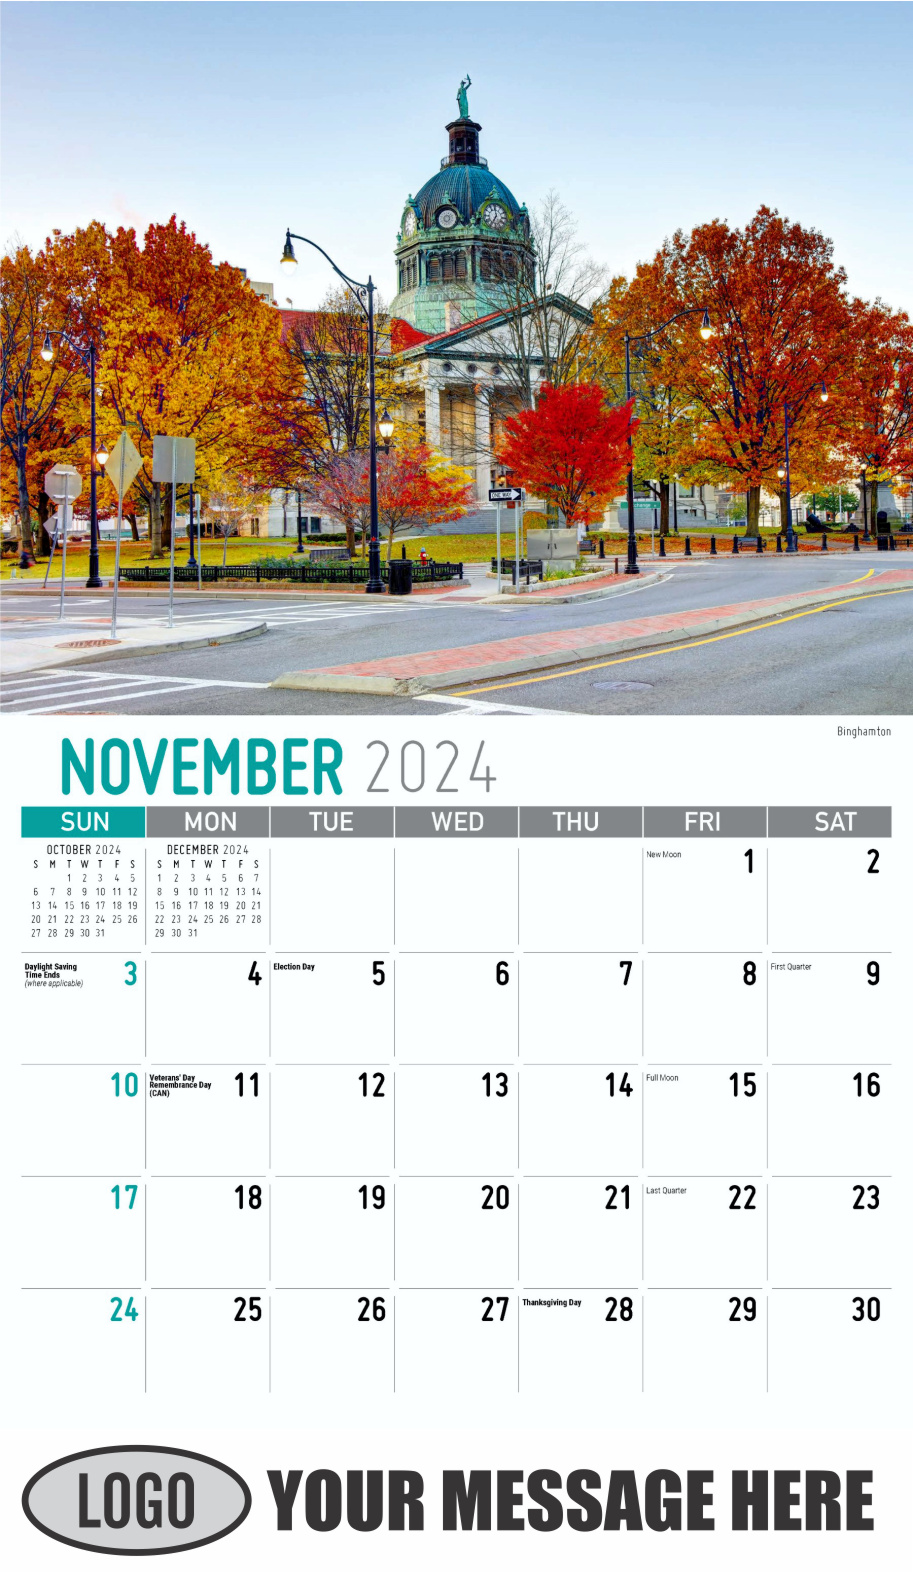 Scenes of New York 2024 Business Promotional Wall Calendar - November